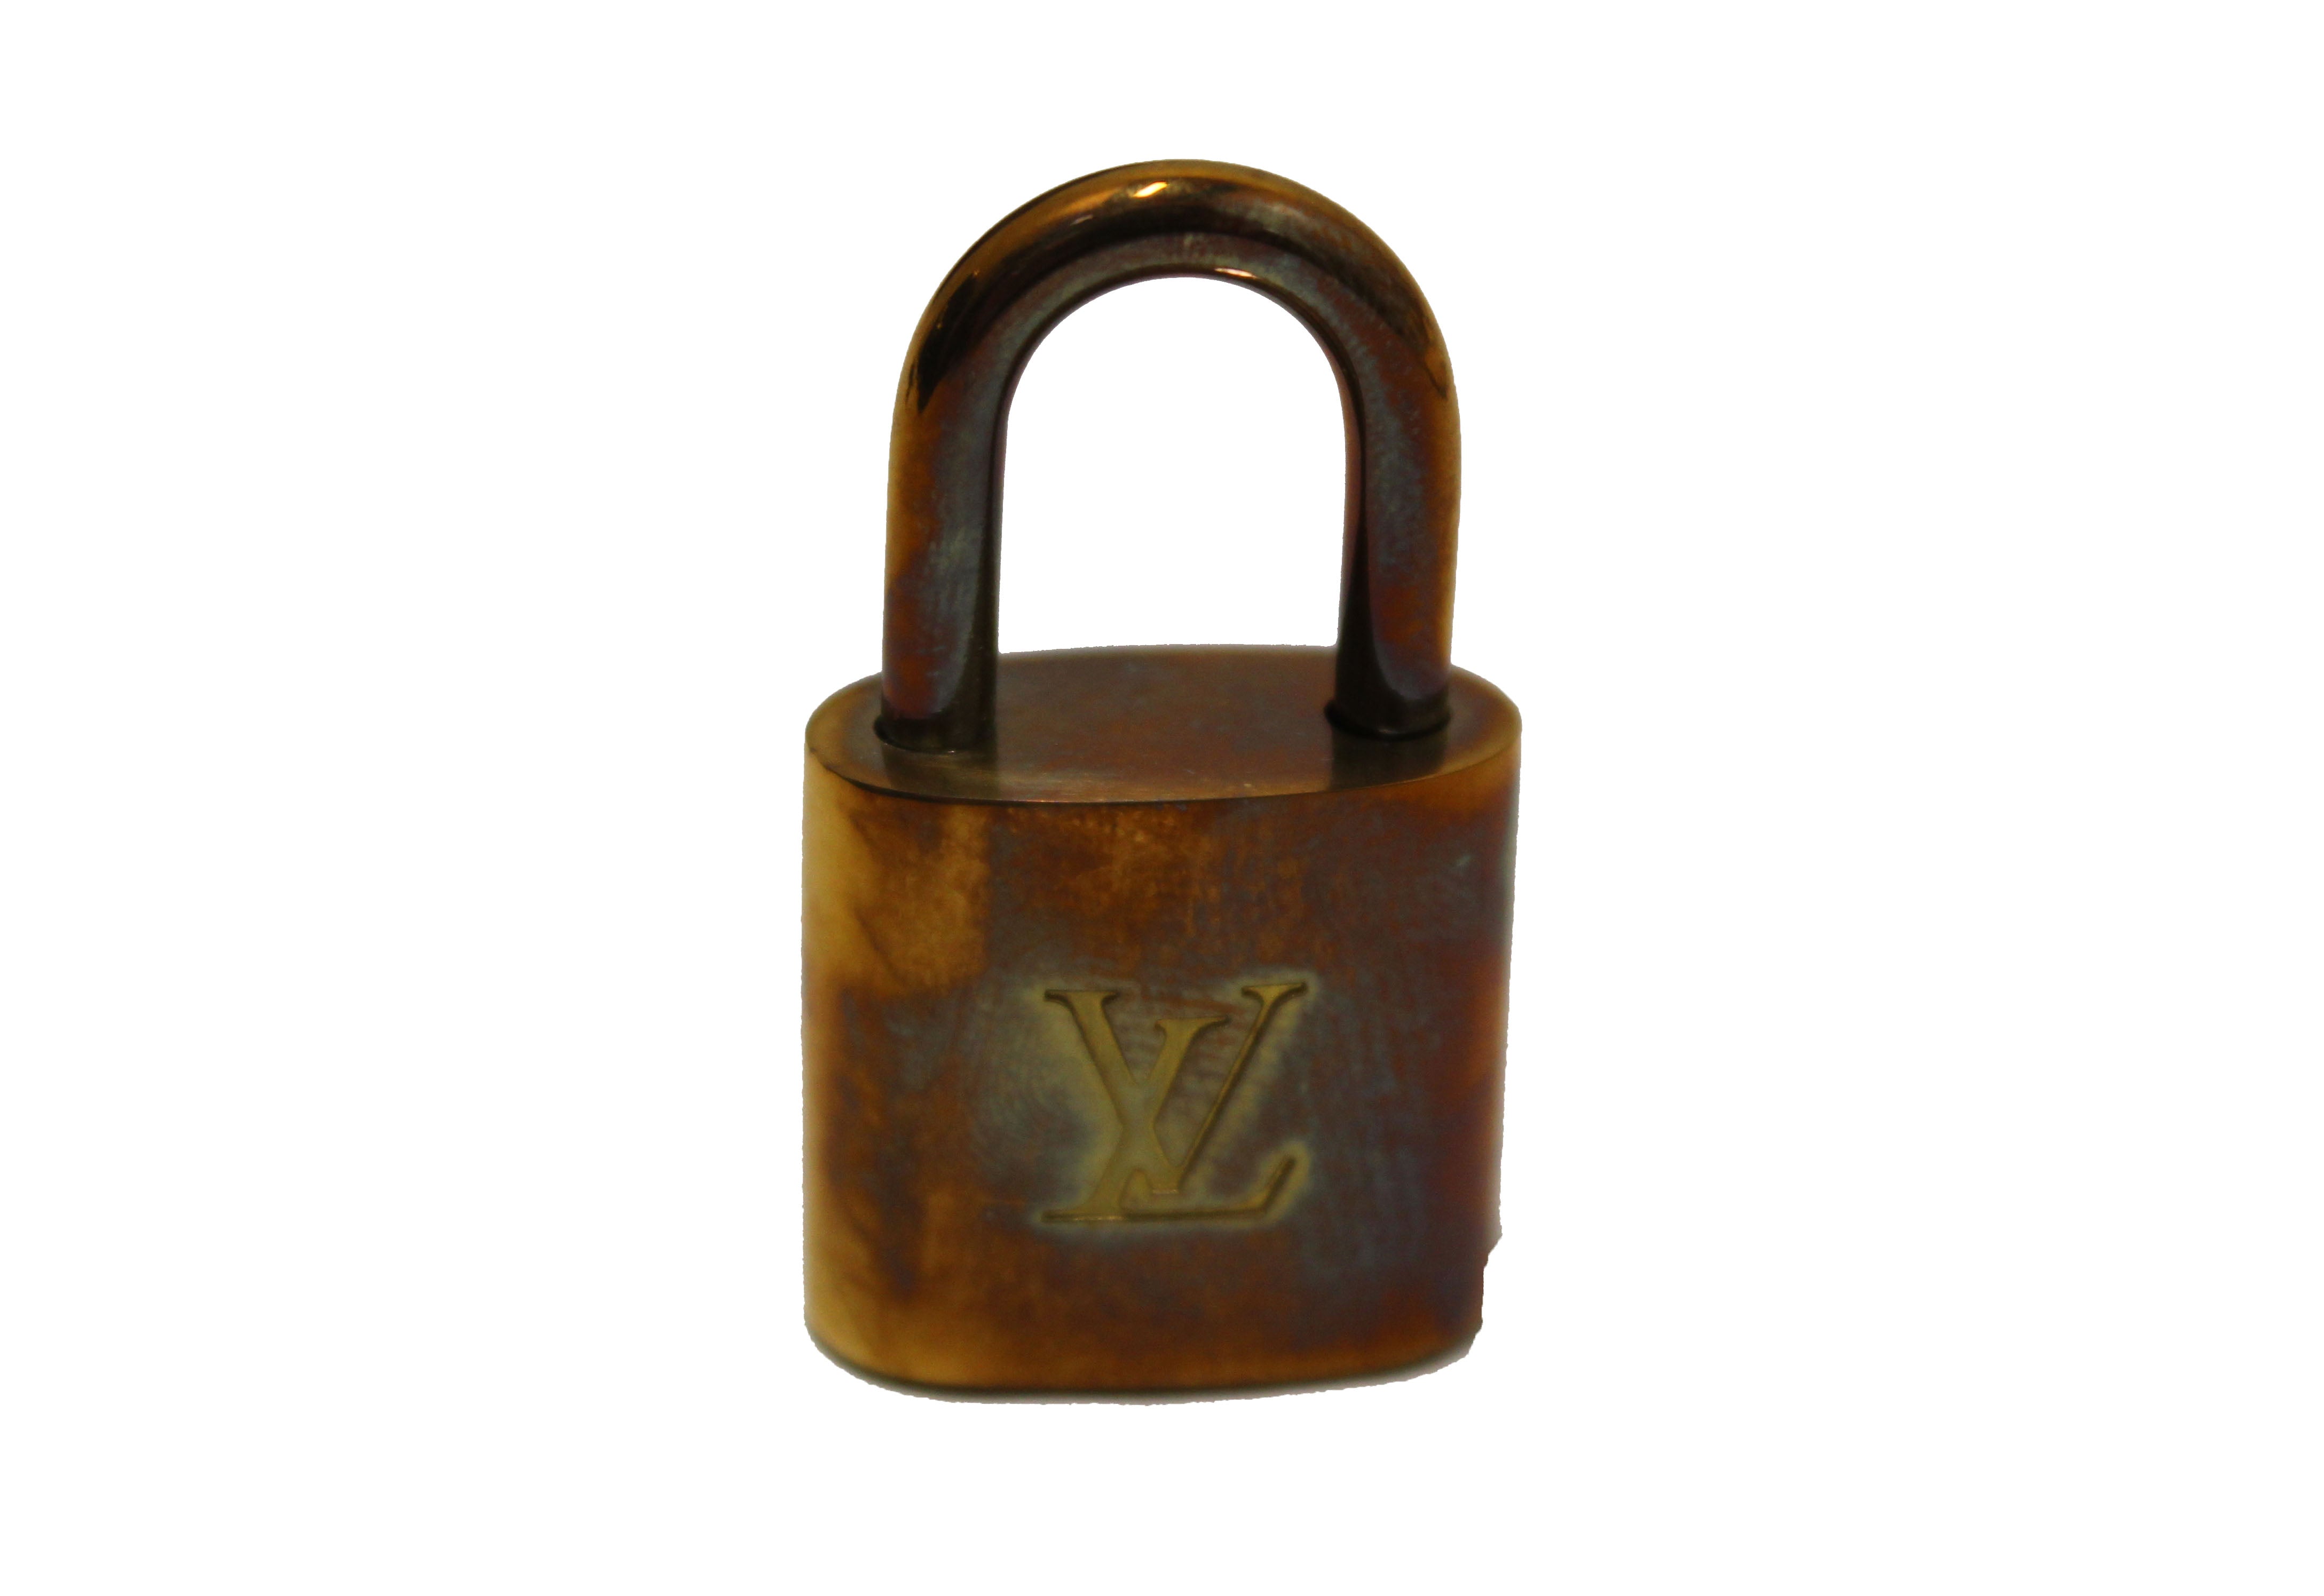 Authentic Louis Vuitton Damier Ebene Speedy 30 Handbag